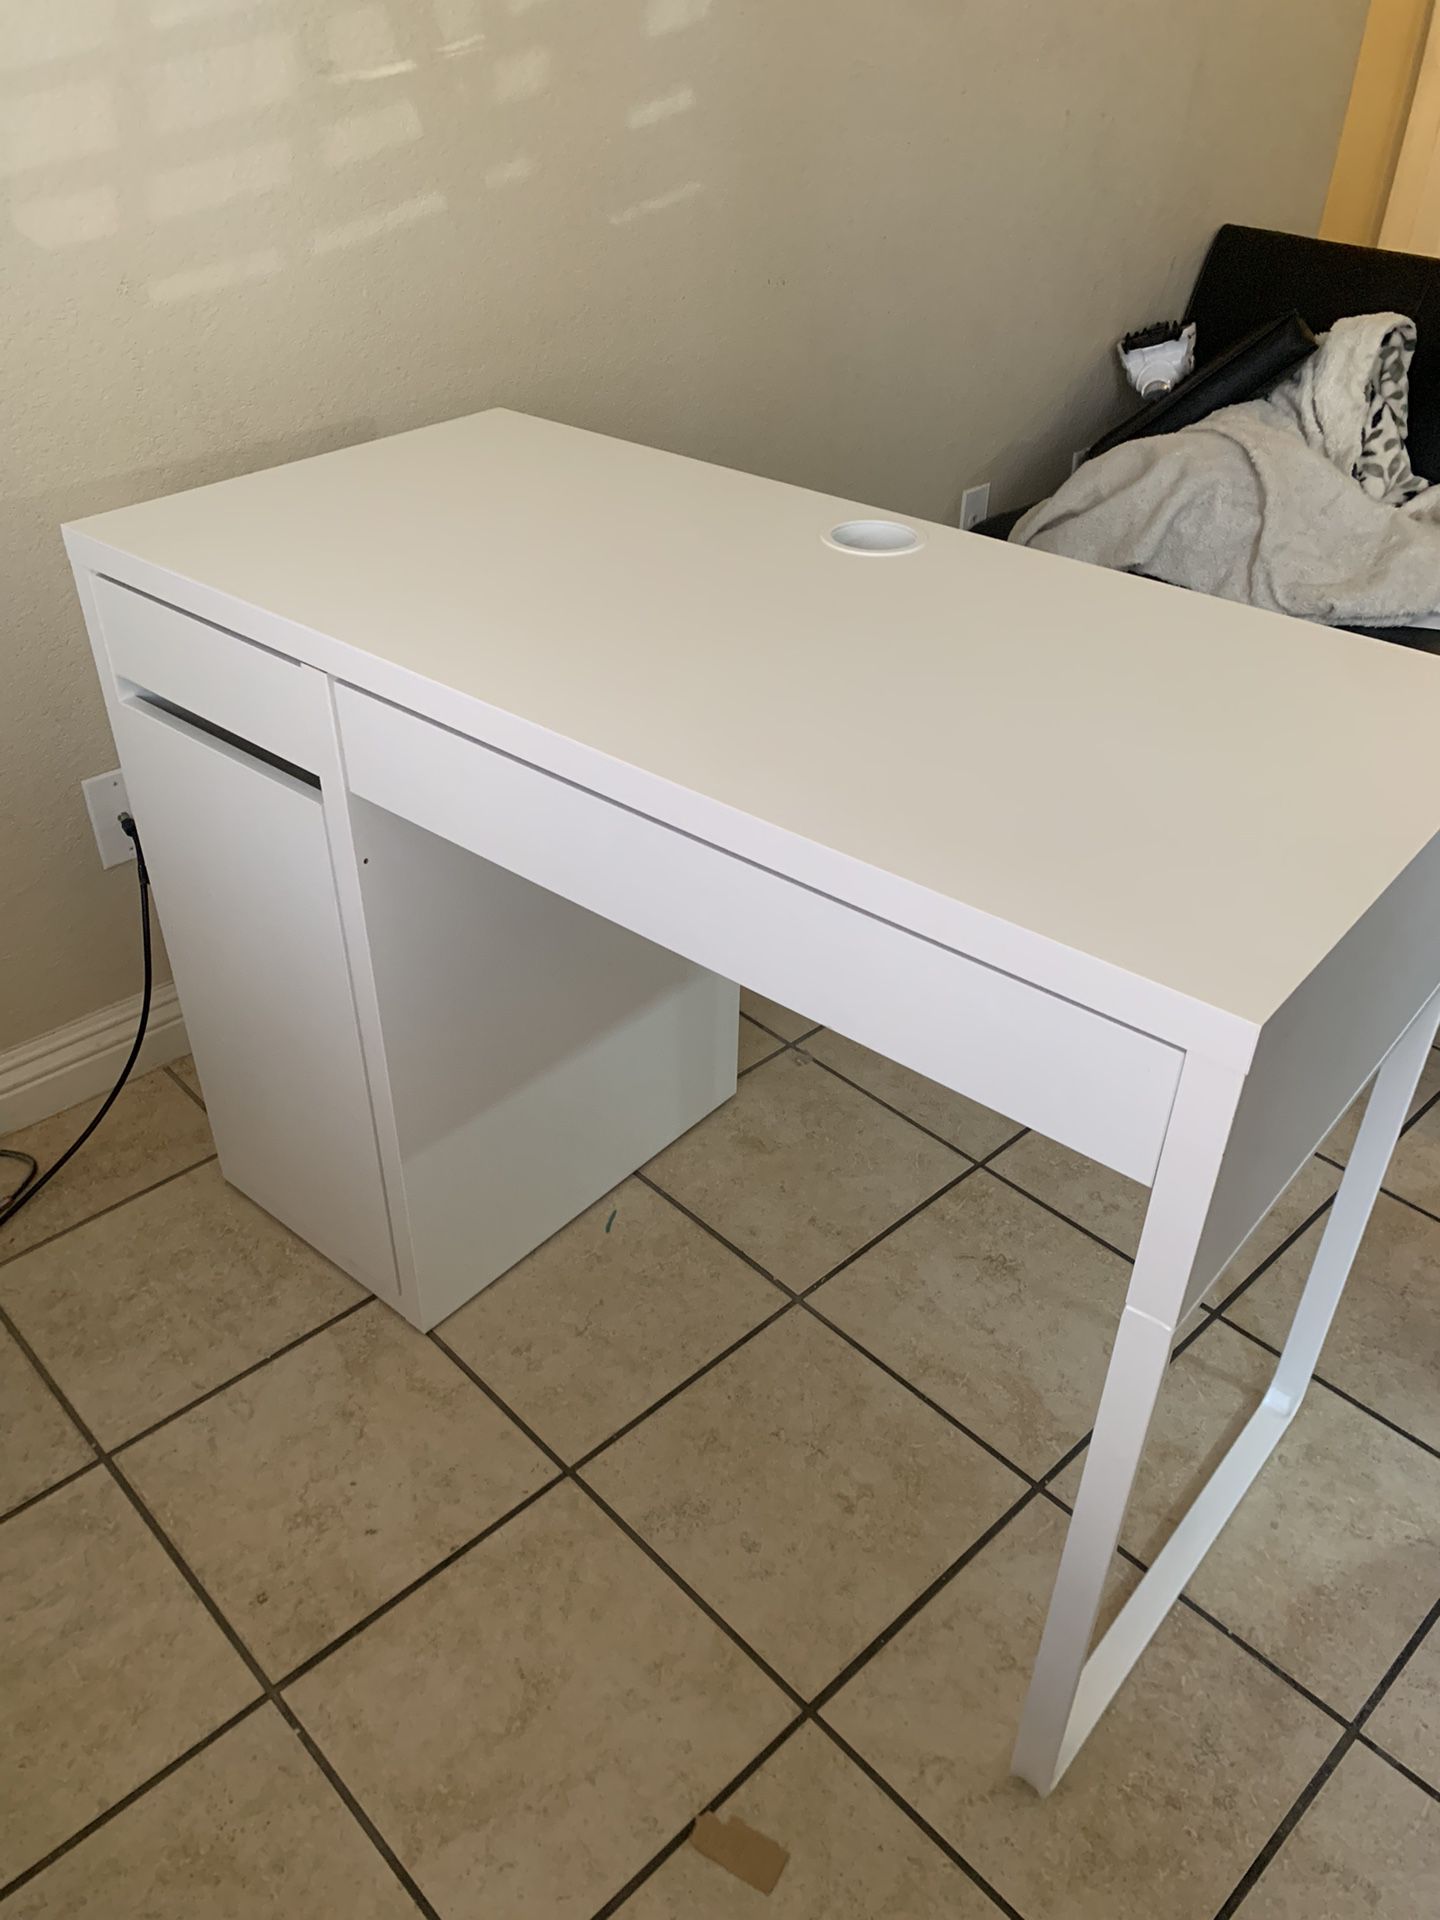 Study/office desk brand new 